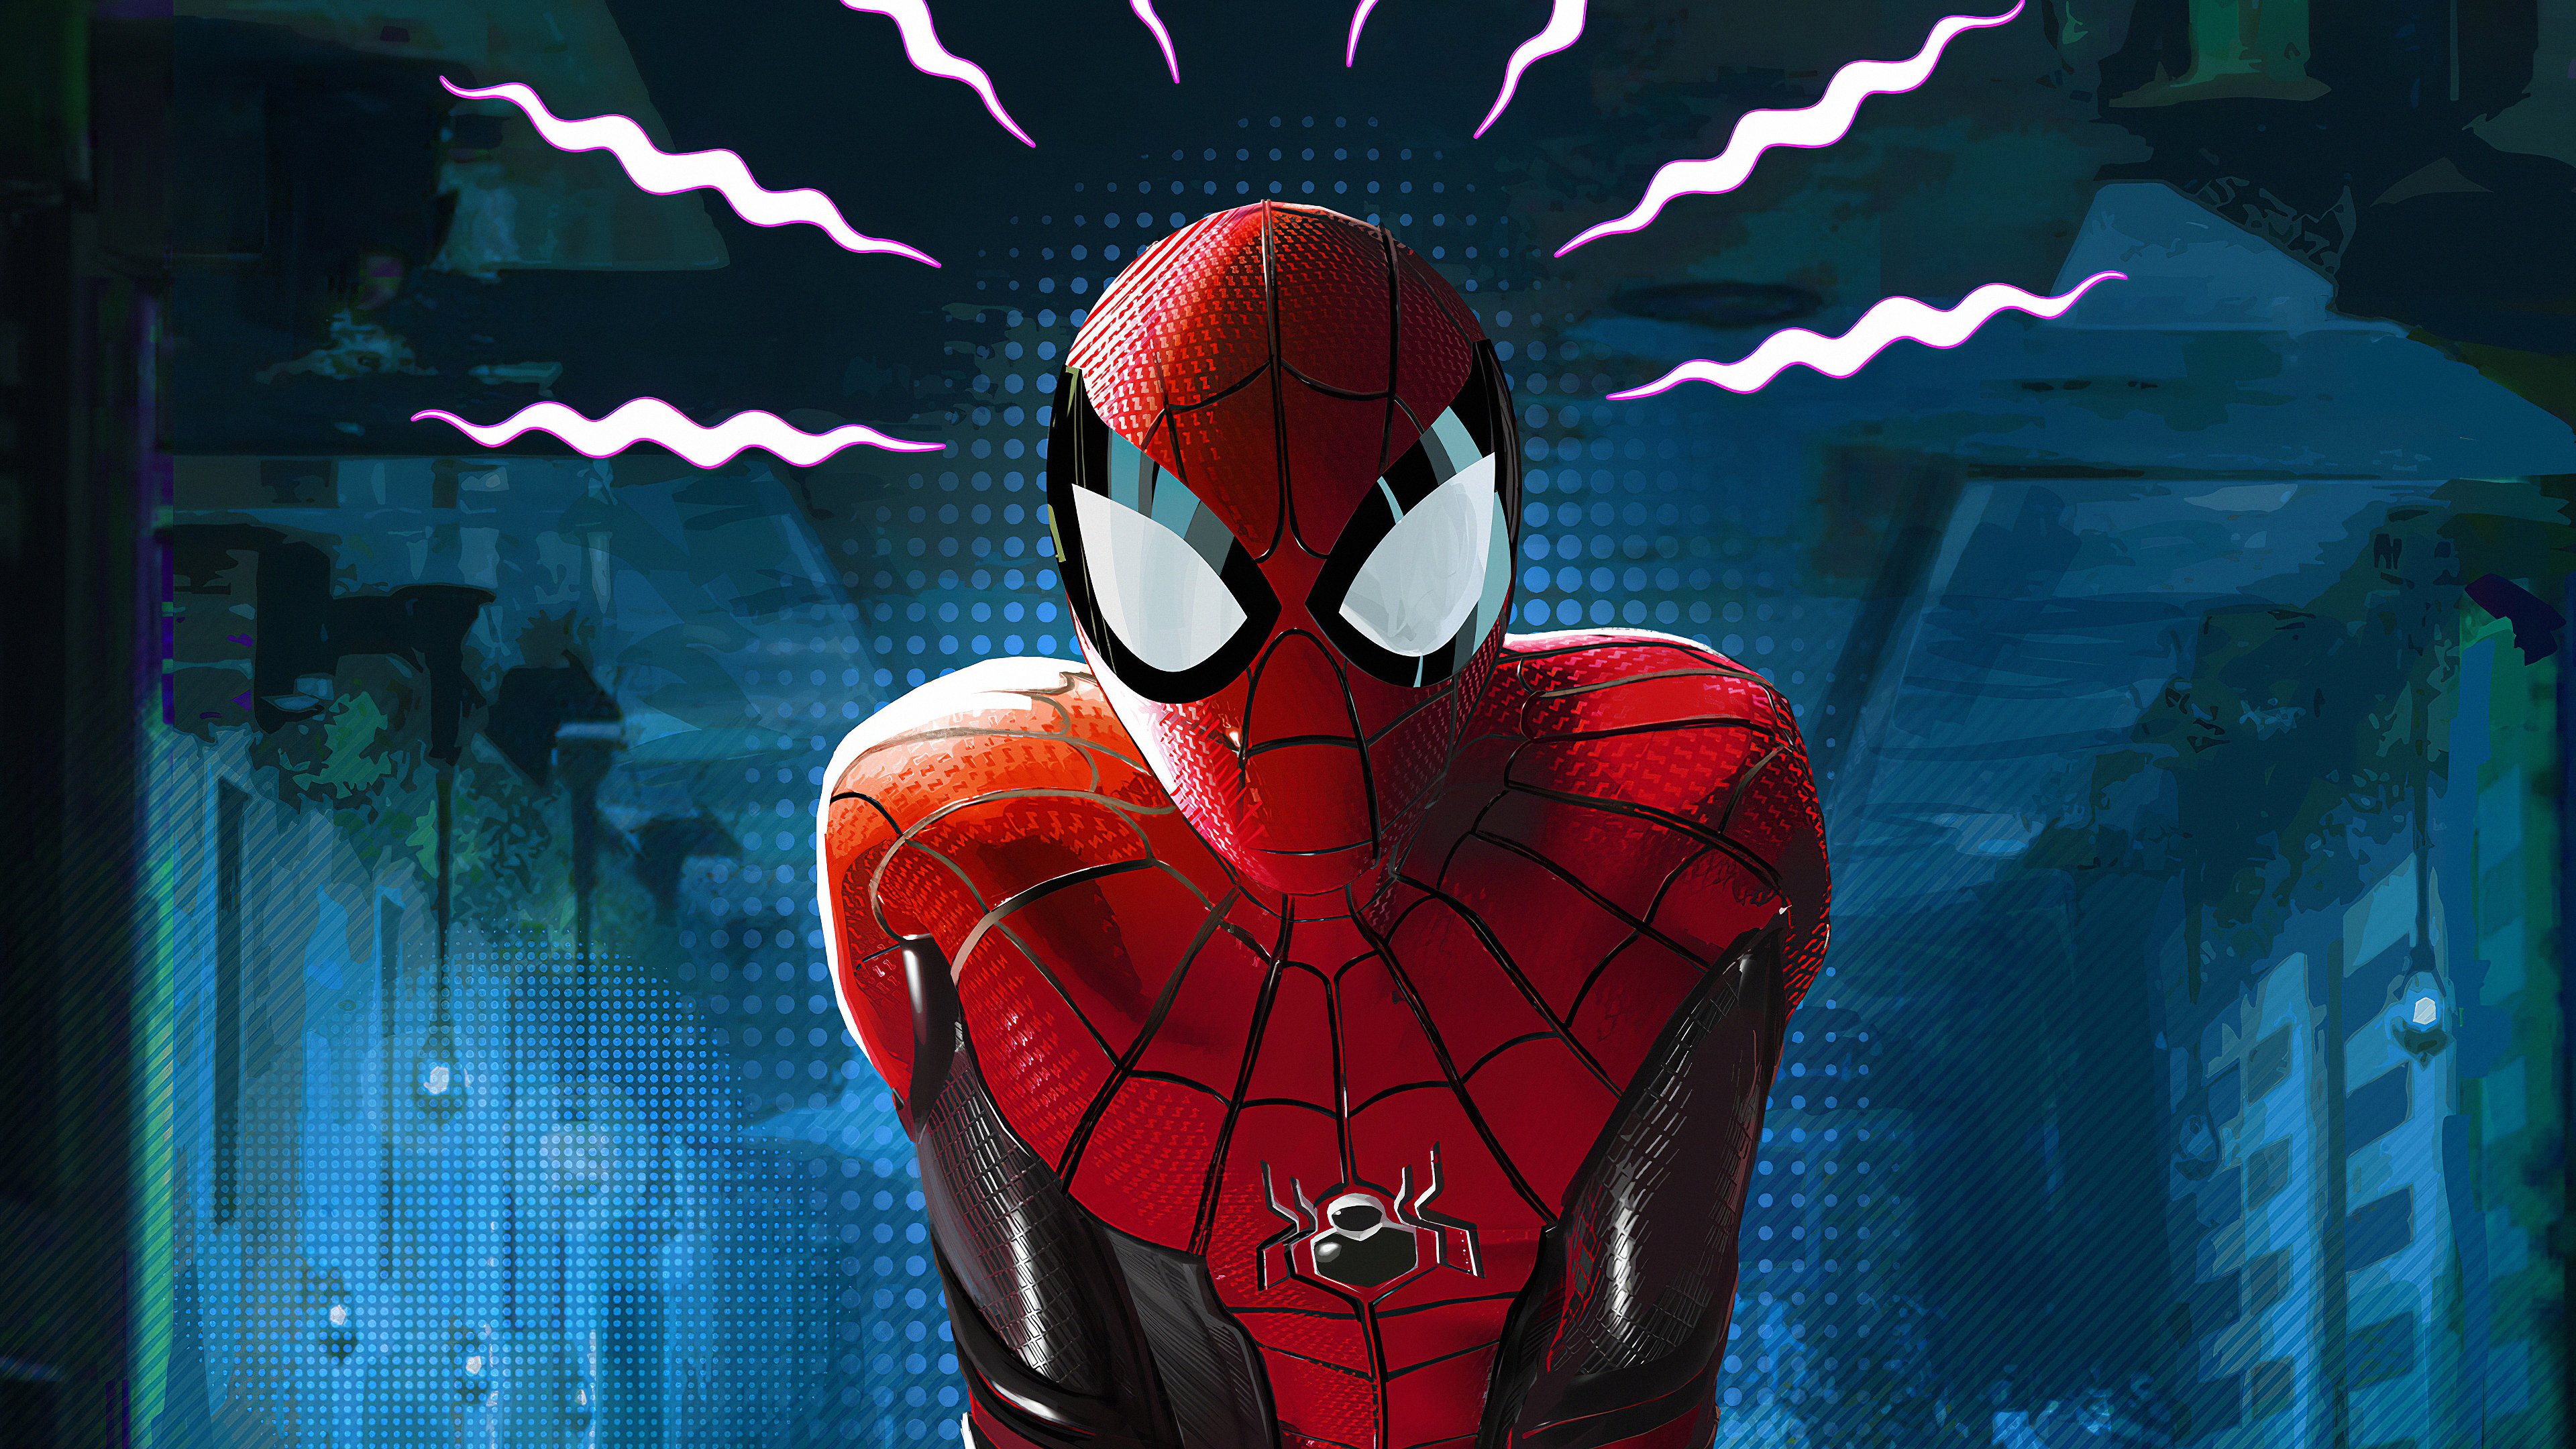 Spiderman Sense, HD Superheroes, 4k Wallpapers, Image, Backgrounds, Photos ...